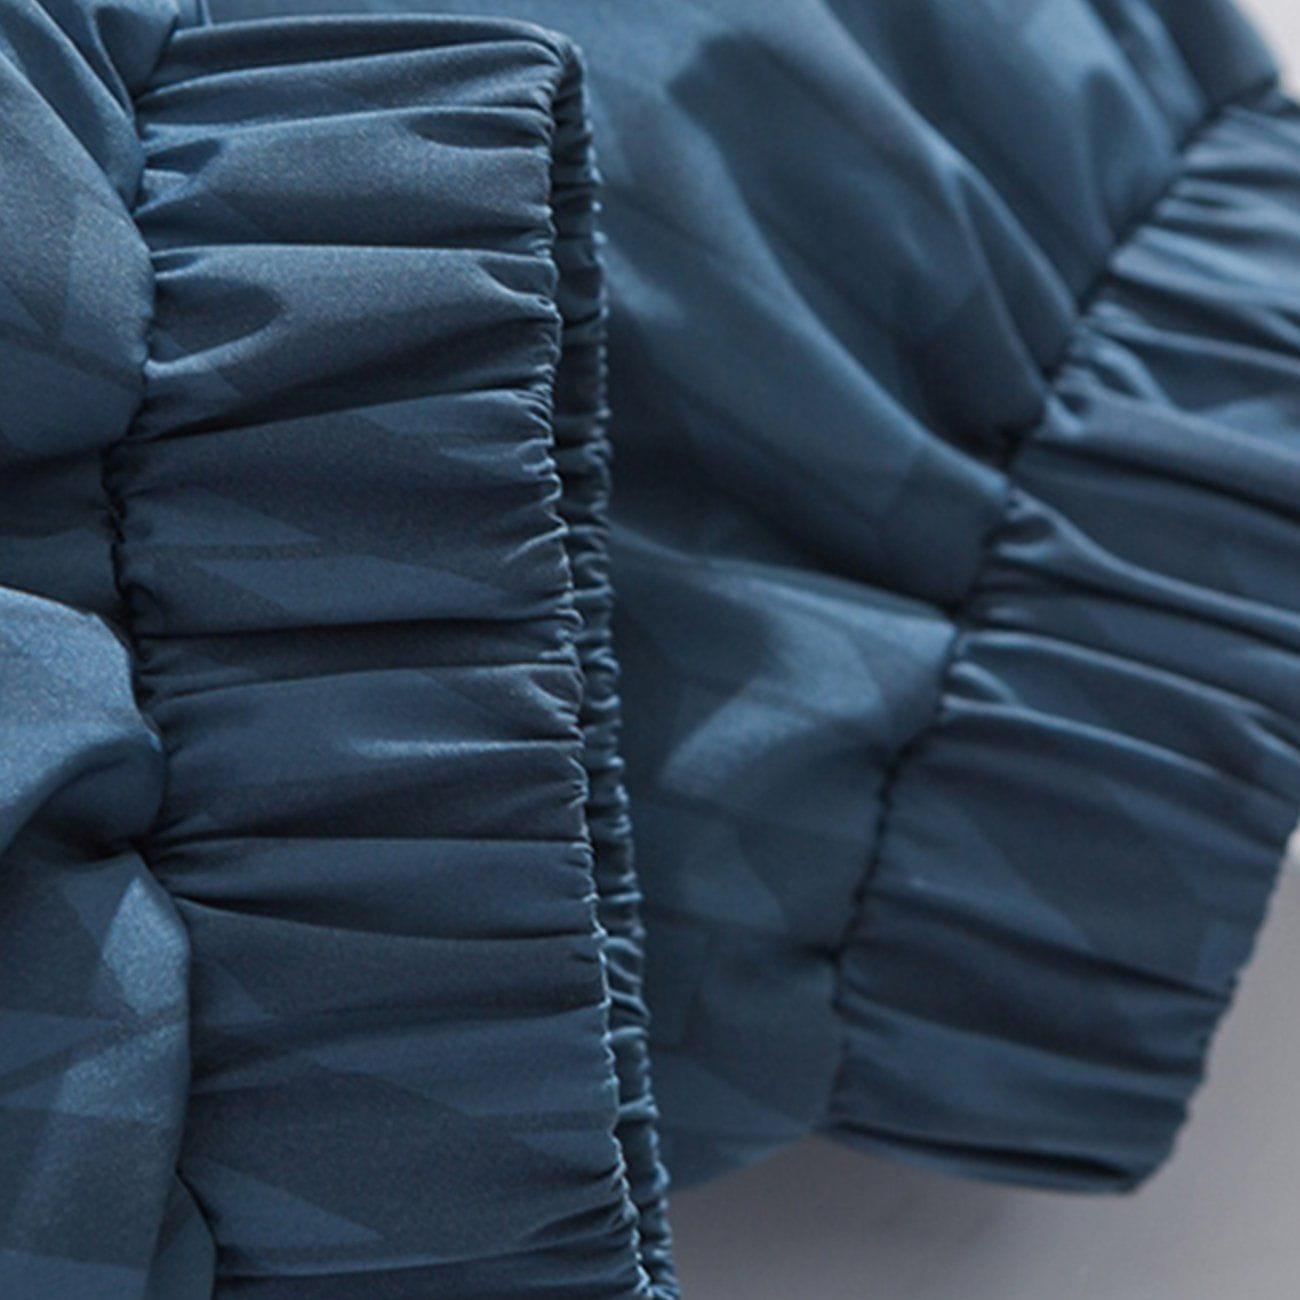 Majesda® - Stitching Shoe Print Winter Coat outfit ideas streetwear fashion